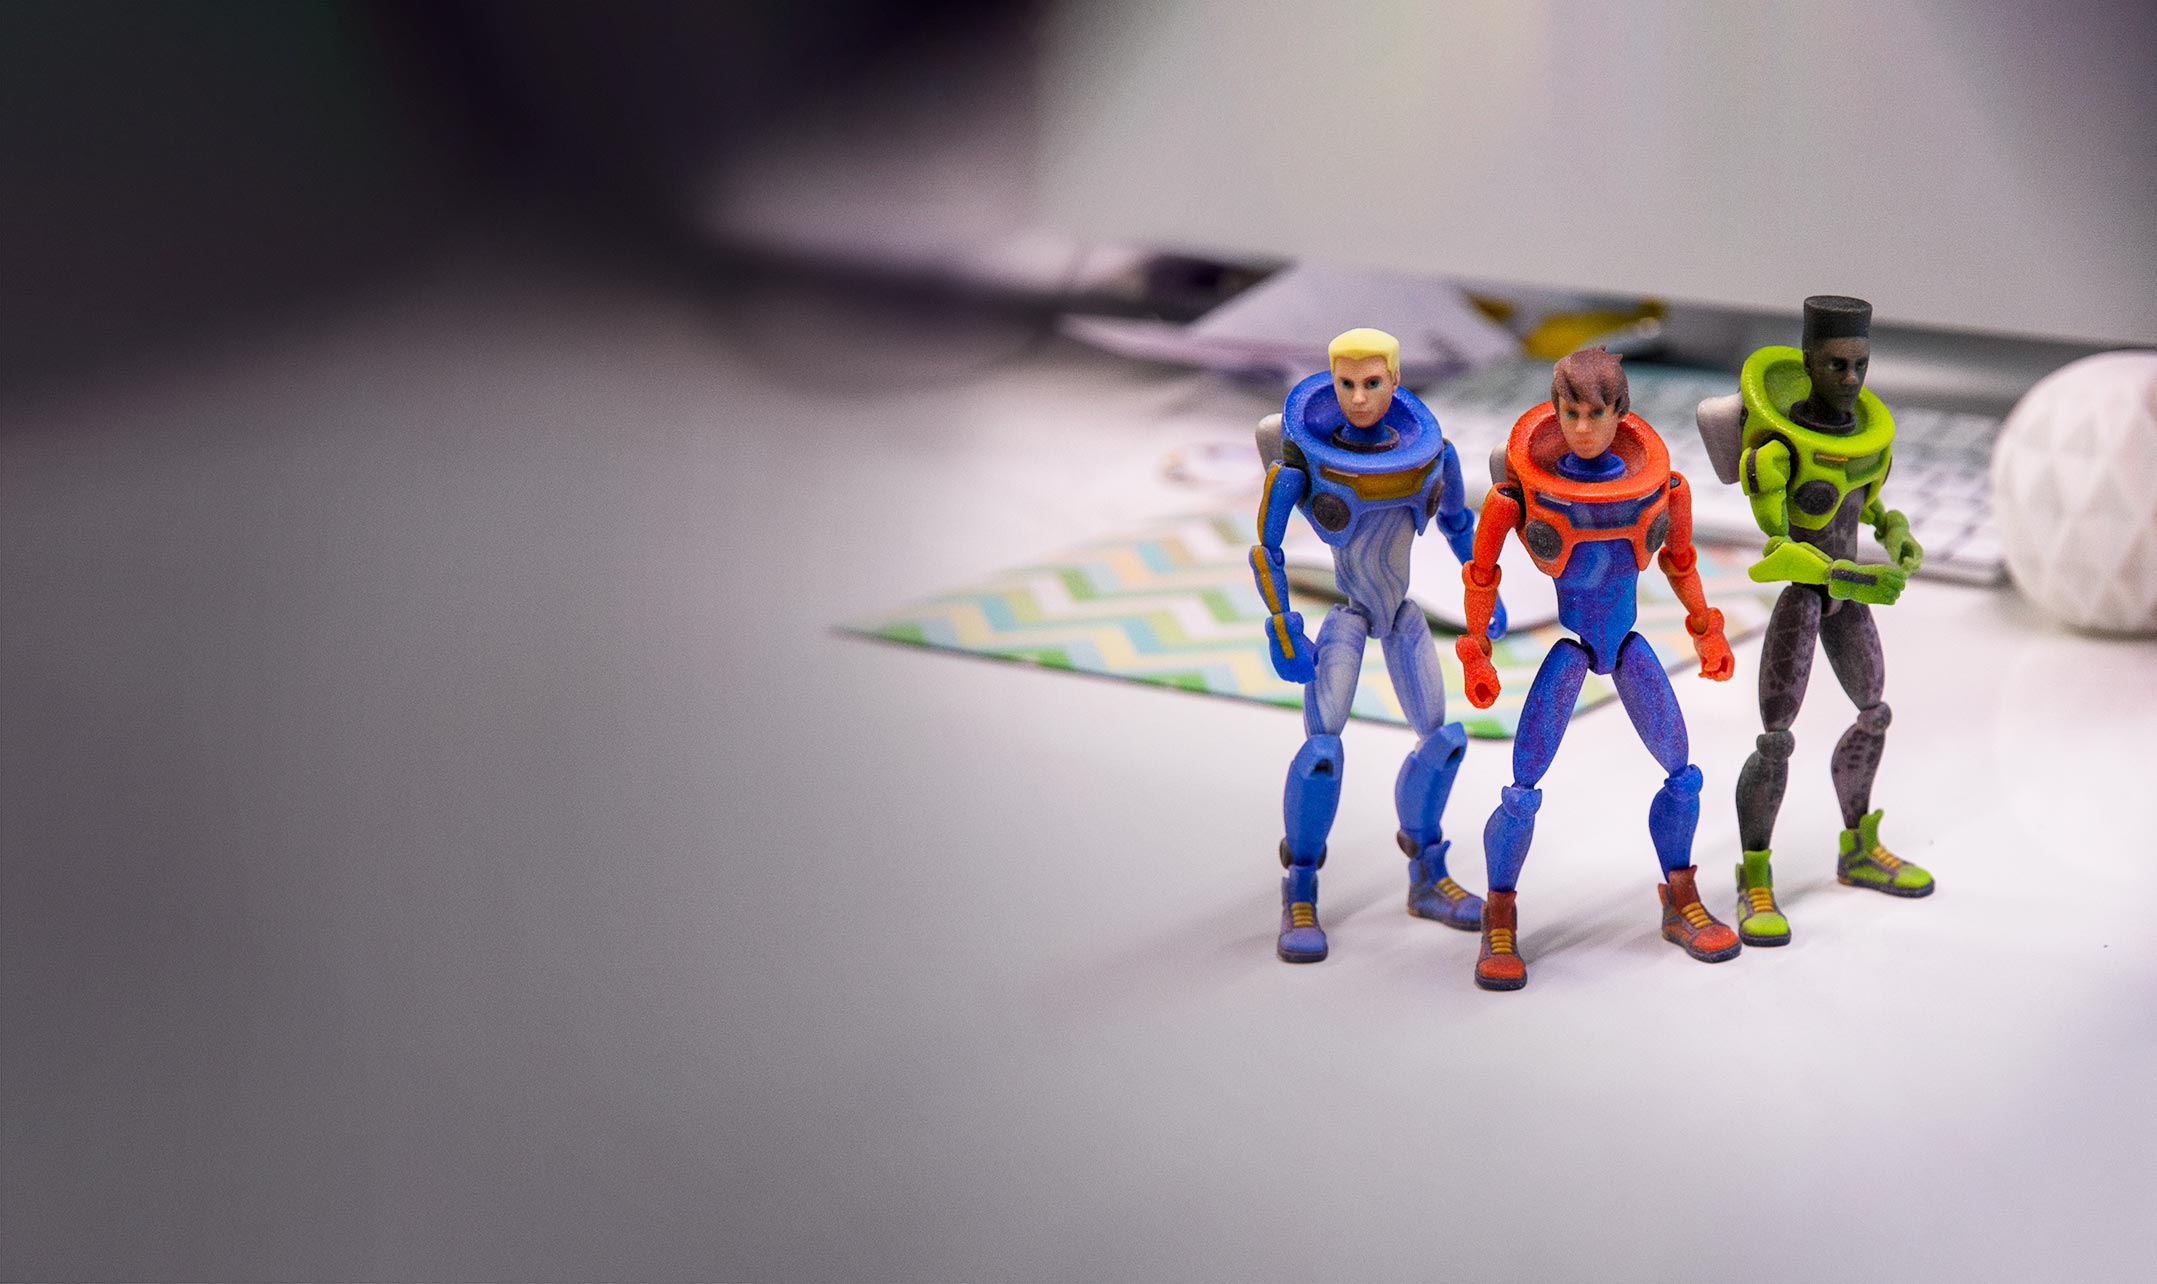 Sprint 3D printed figures